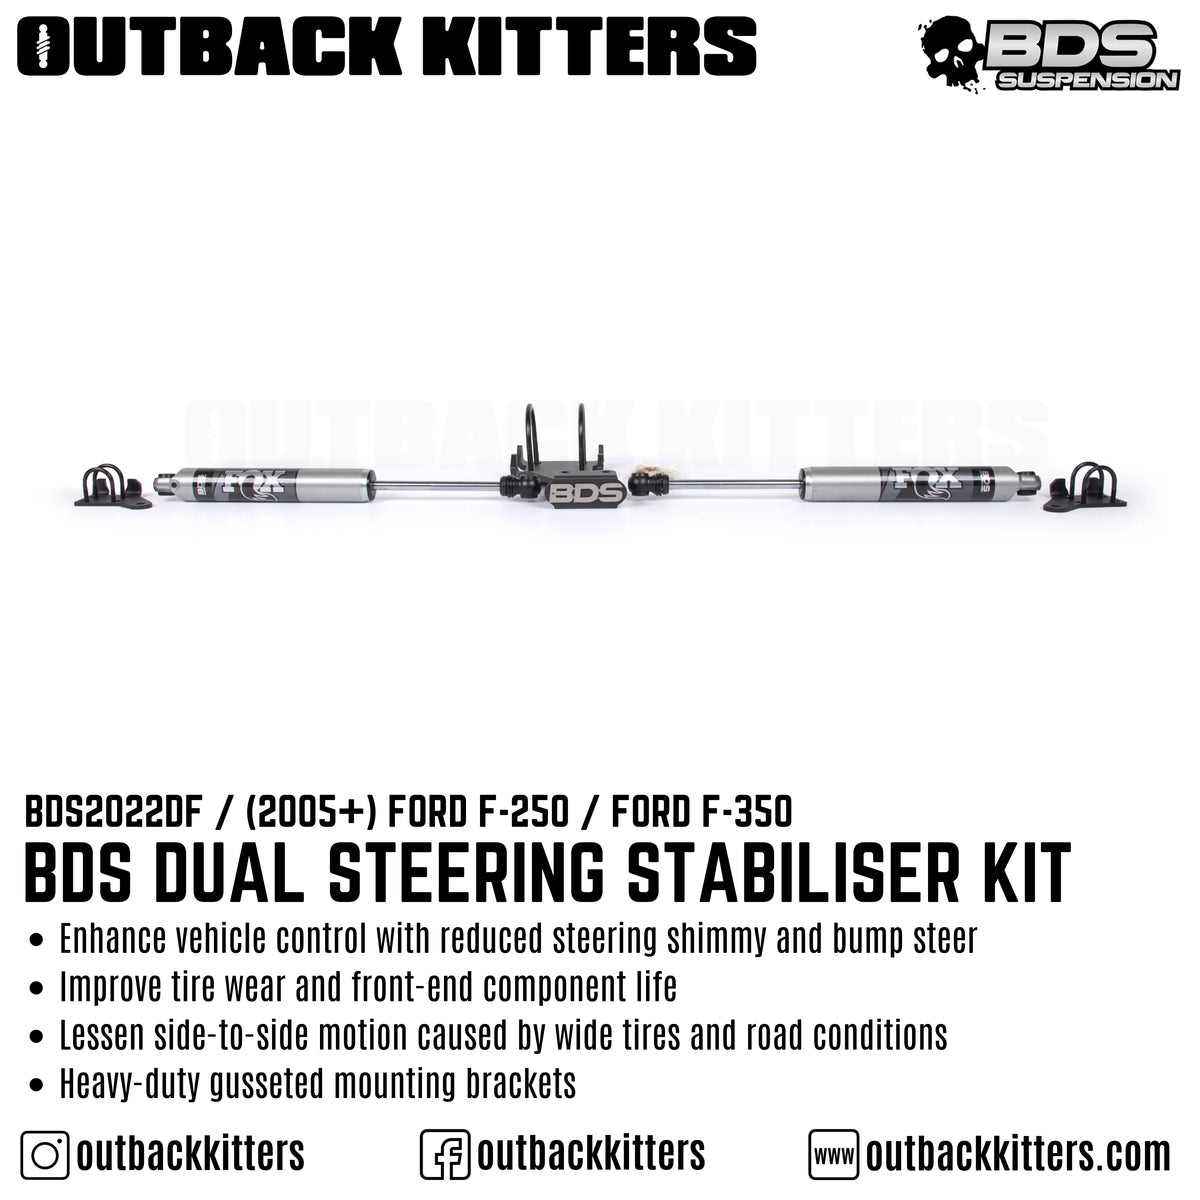 BDS Suspension Dual Steering Stabiliser Kit for 2005+ Ford F250/350